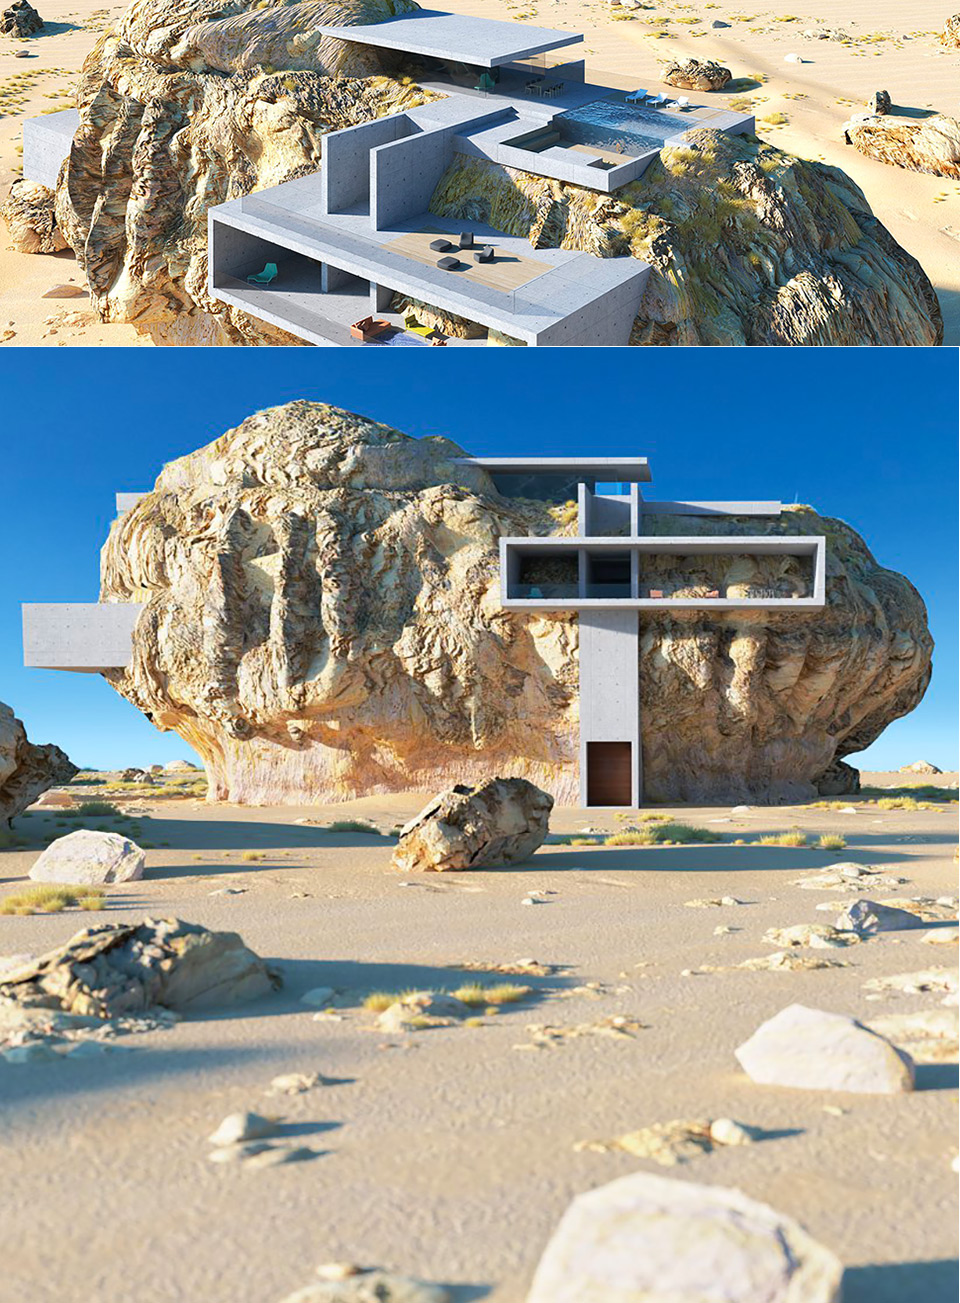 House Inside a Rock